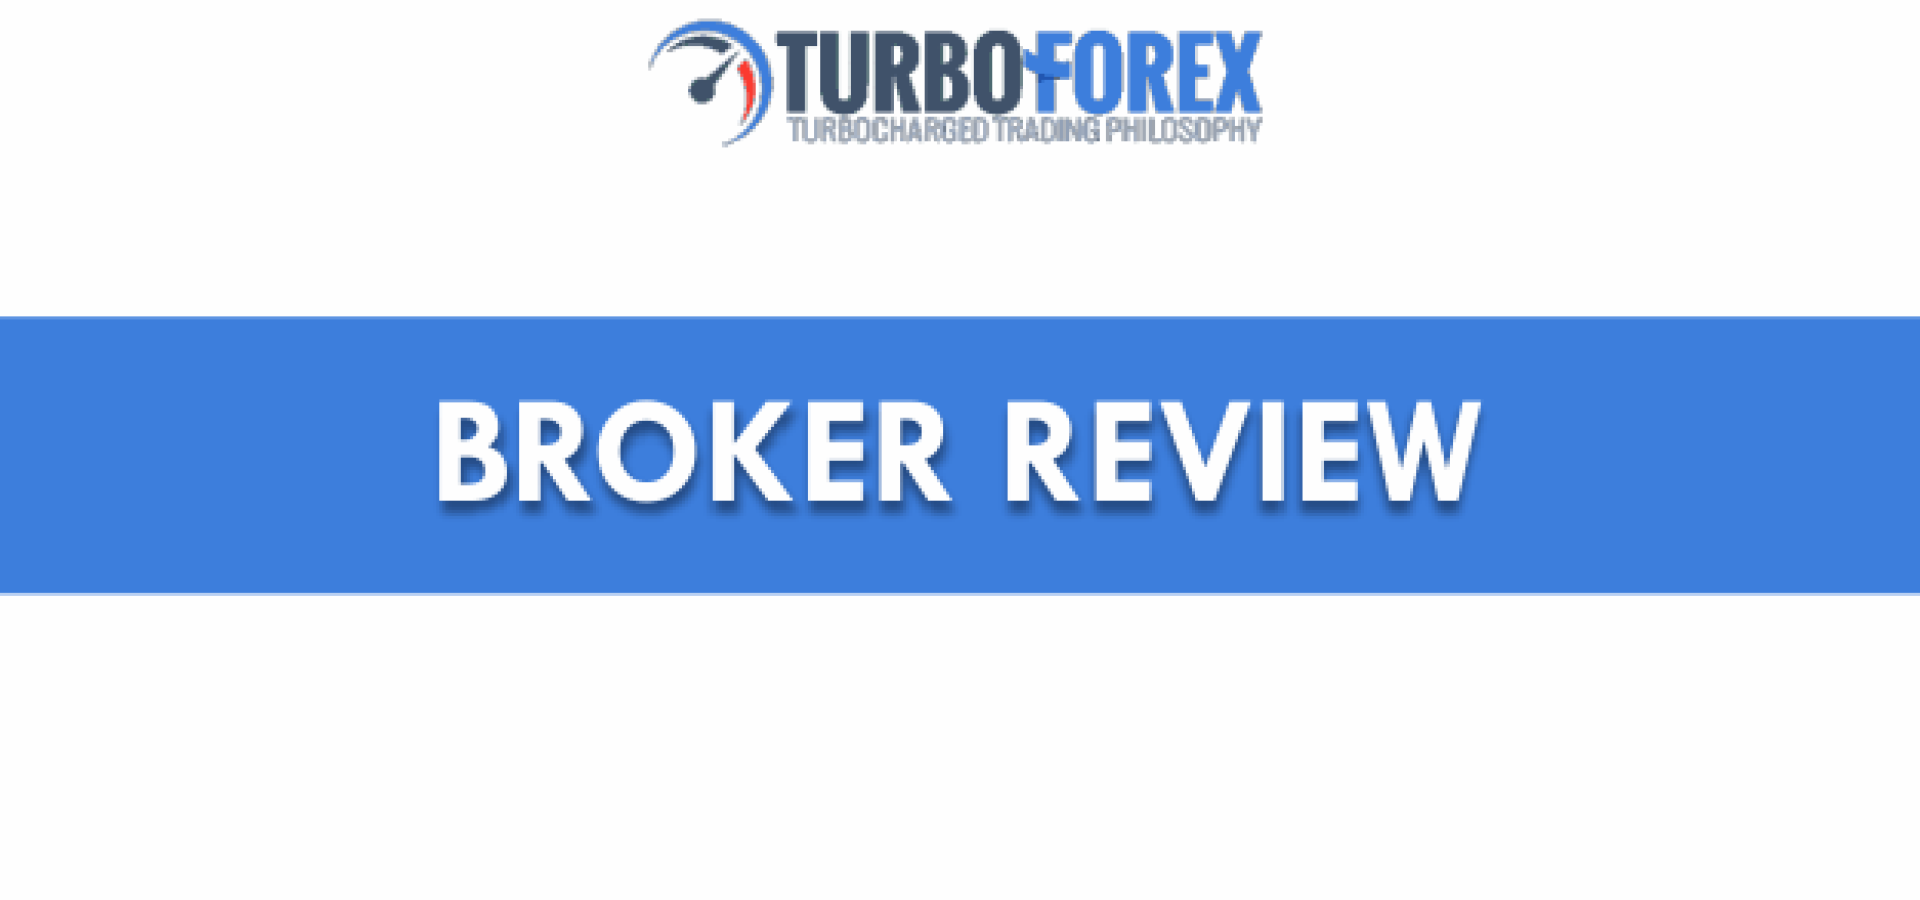 TurboForex Broker Review